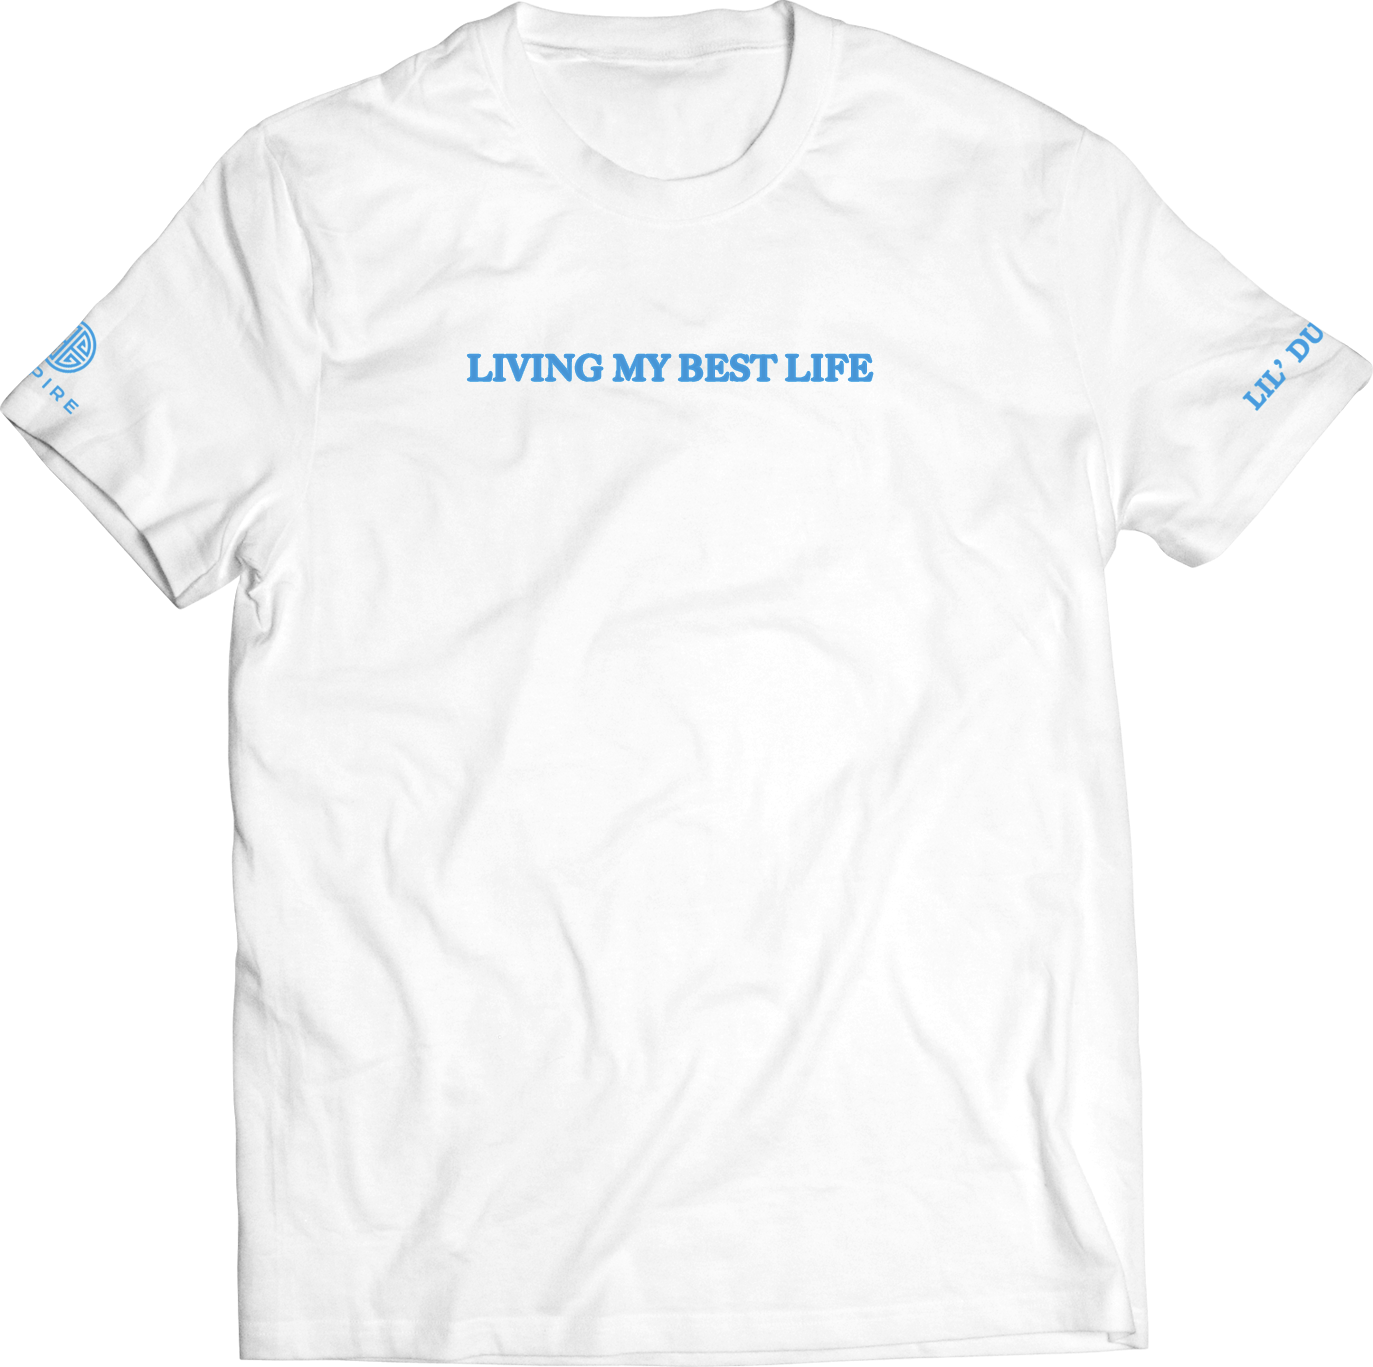 Lil Duval - Best Life T-Shirt (White)